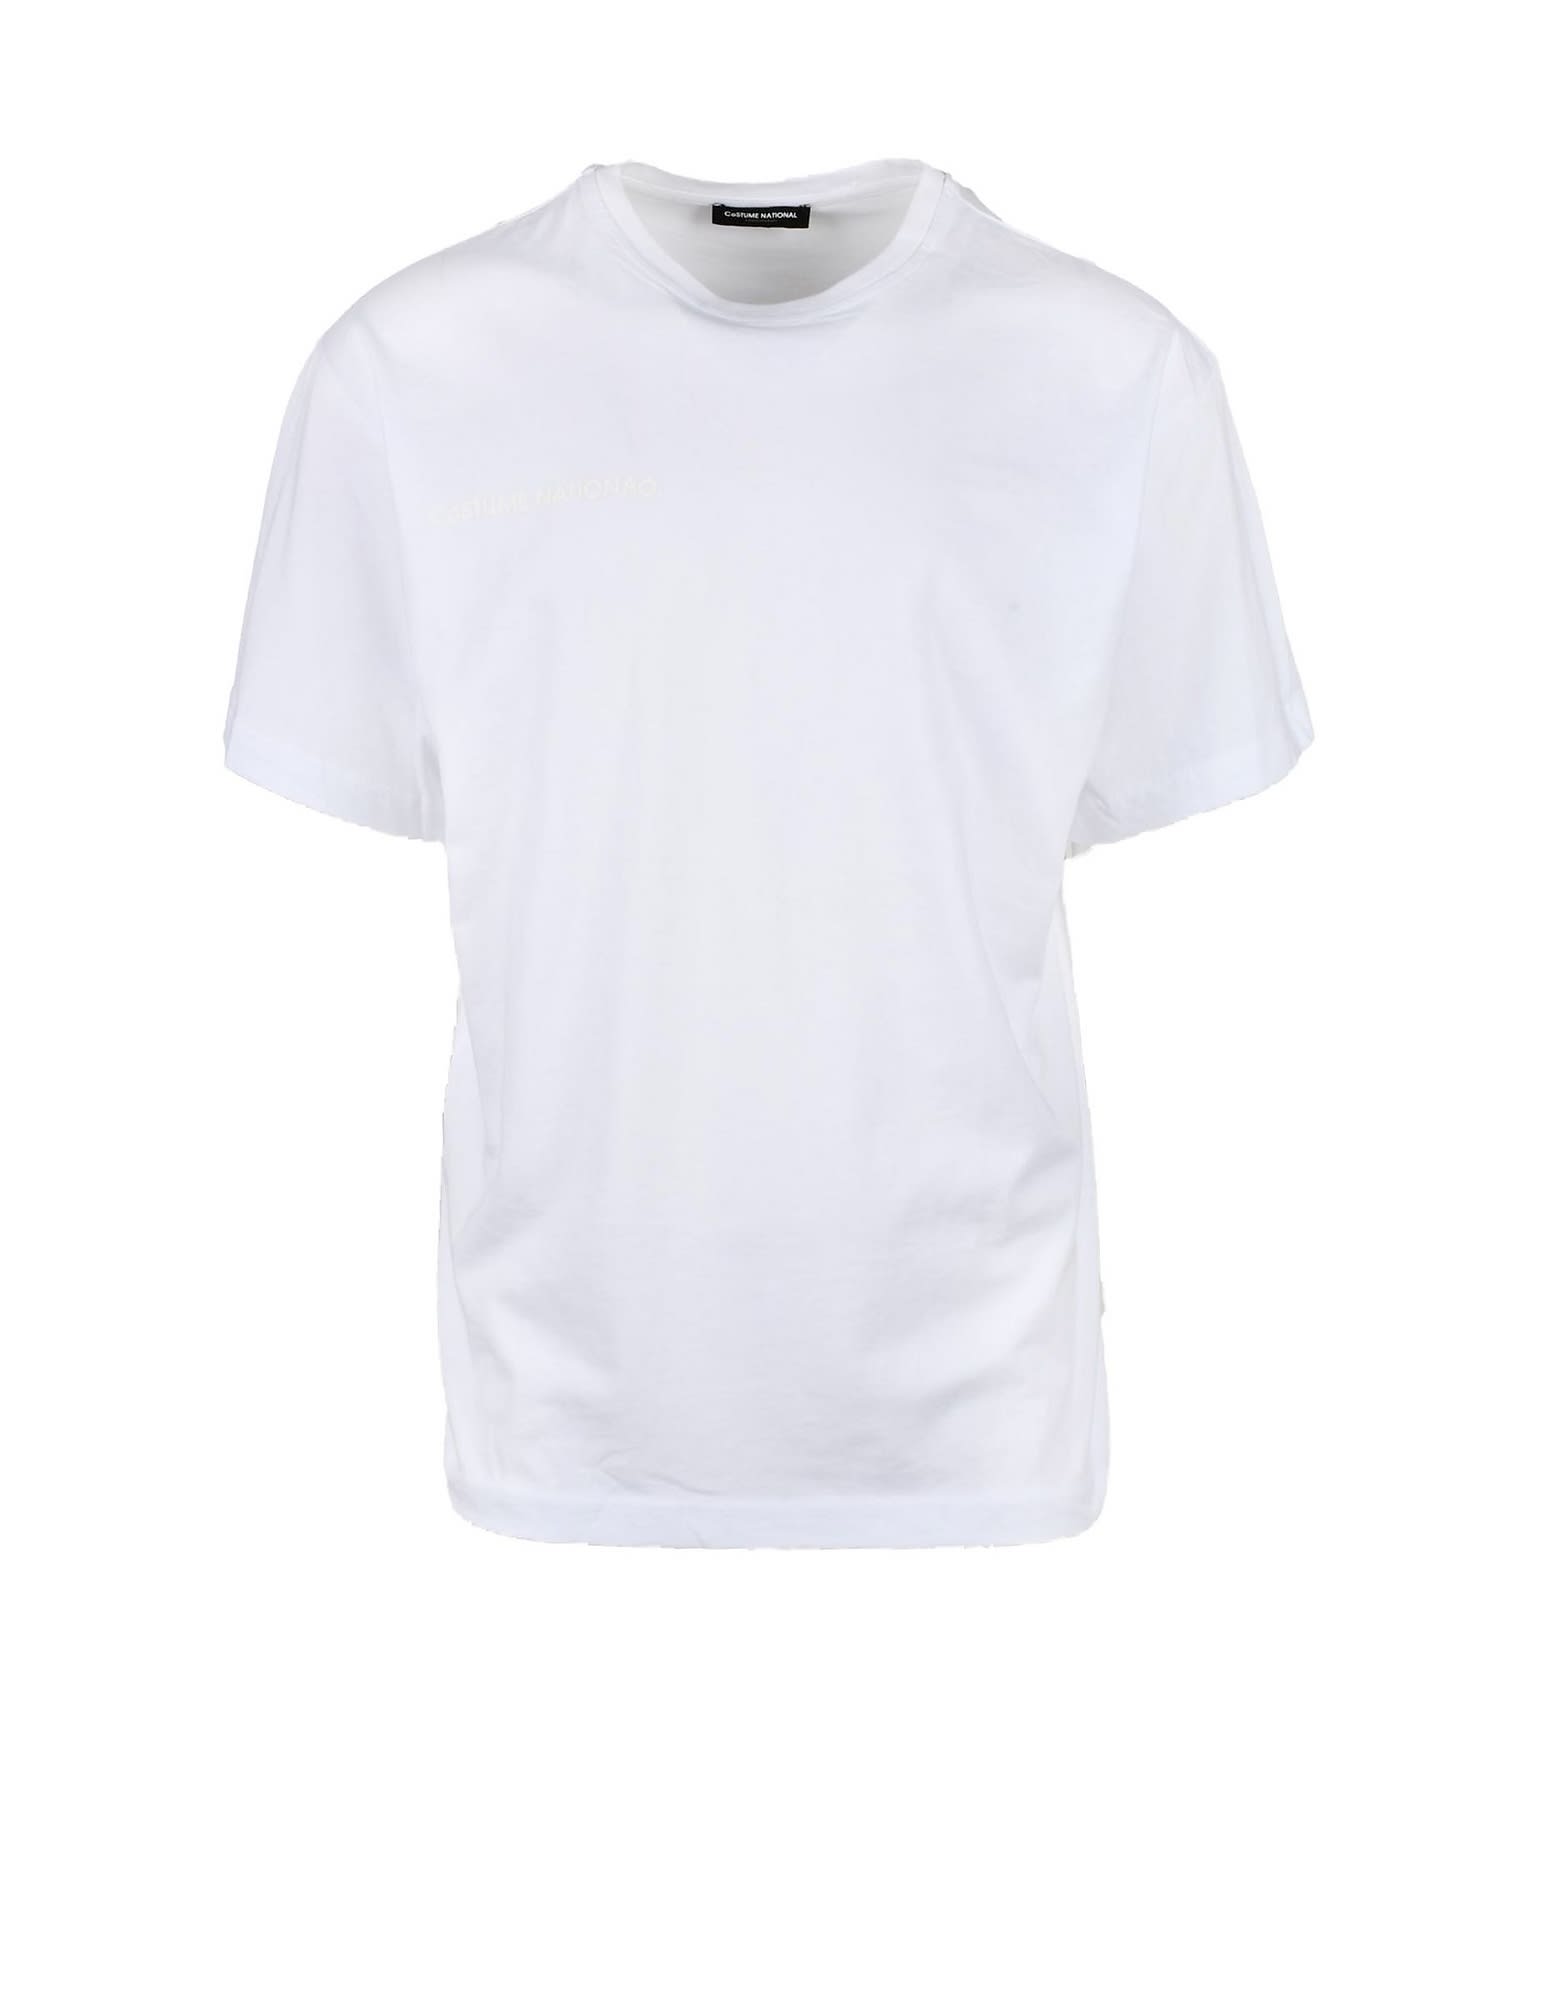 CoSTUME NATIONAL CONTEMPORARY Mens White T-shirt